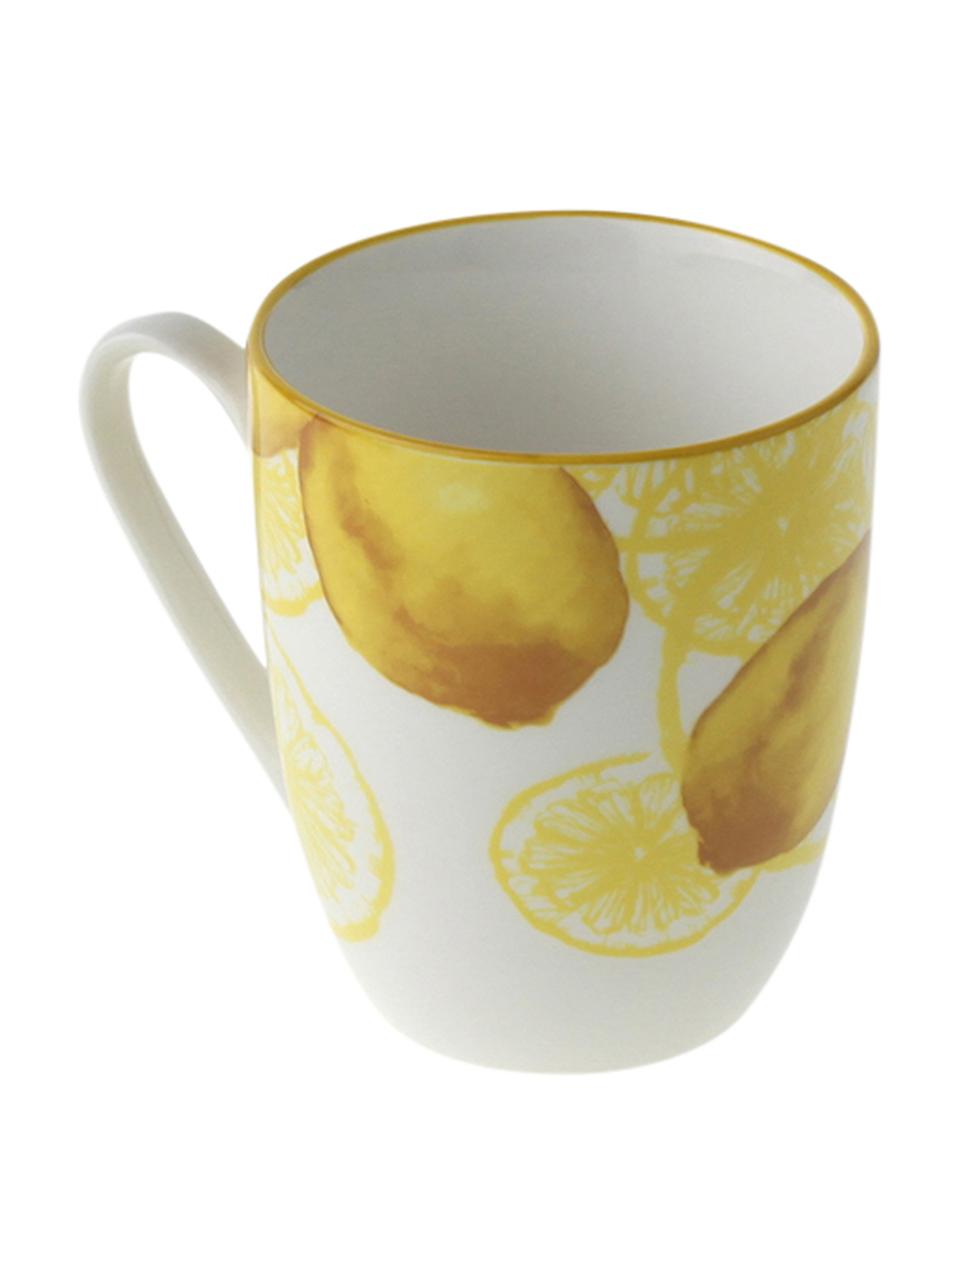 Tassen Lemon mit Zitronen-Motiv, 2 Stück, Porzellan, Weiss, Gelb, Ø 9 x H 10 cm